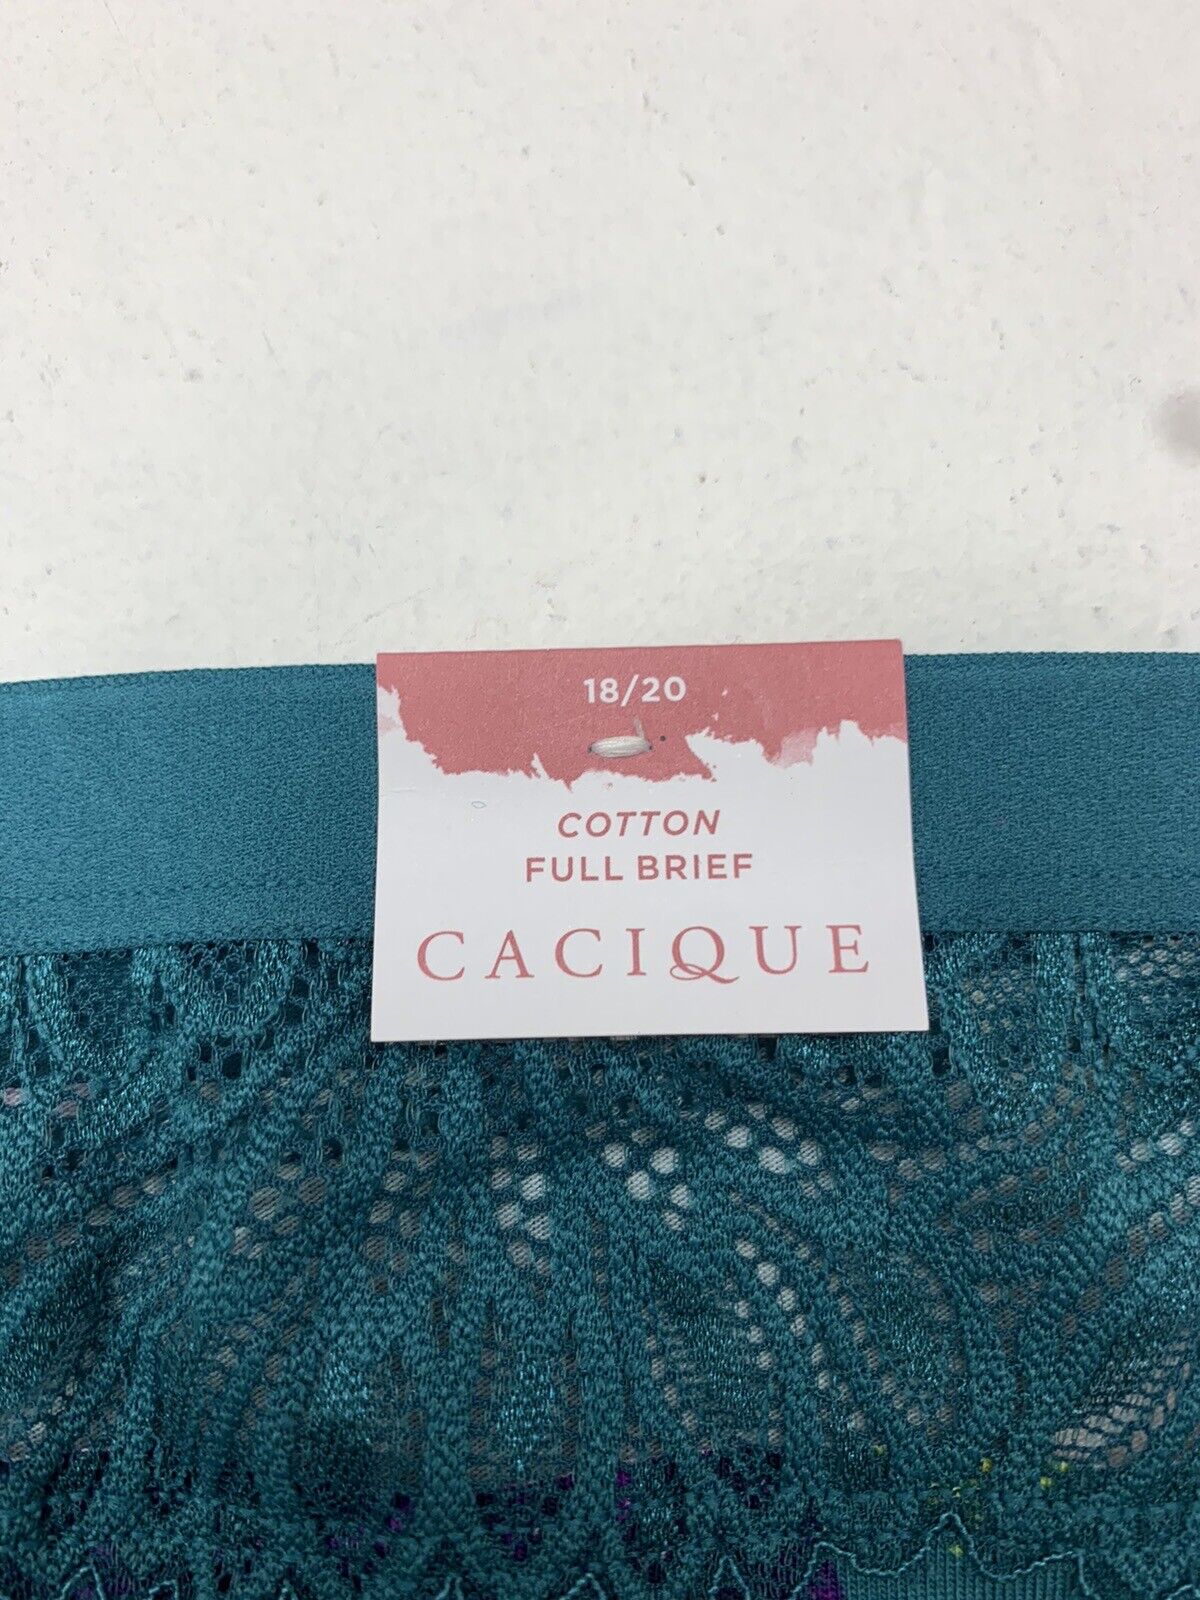 Cacique Womens Teal Blue Floral Print Briefs Size 18/20 - beyond